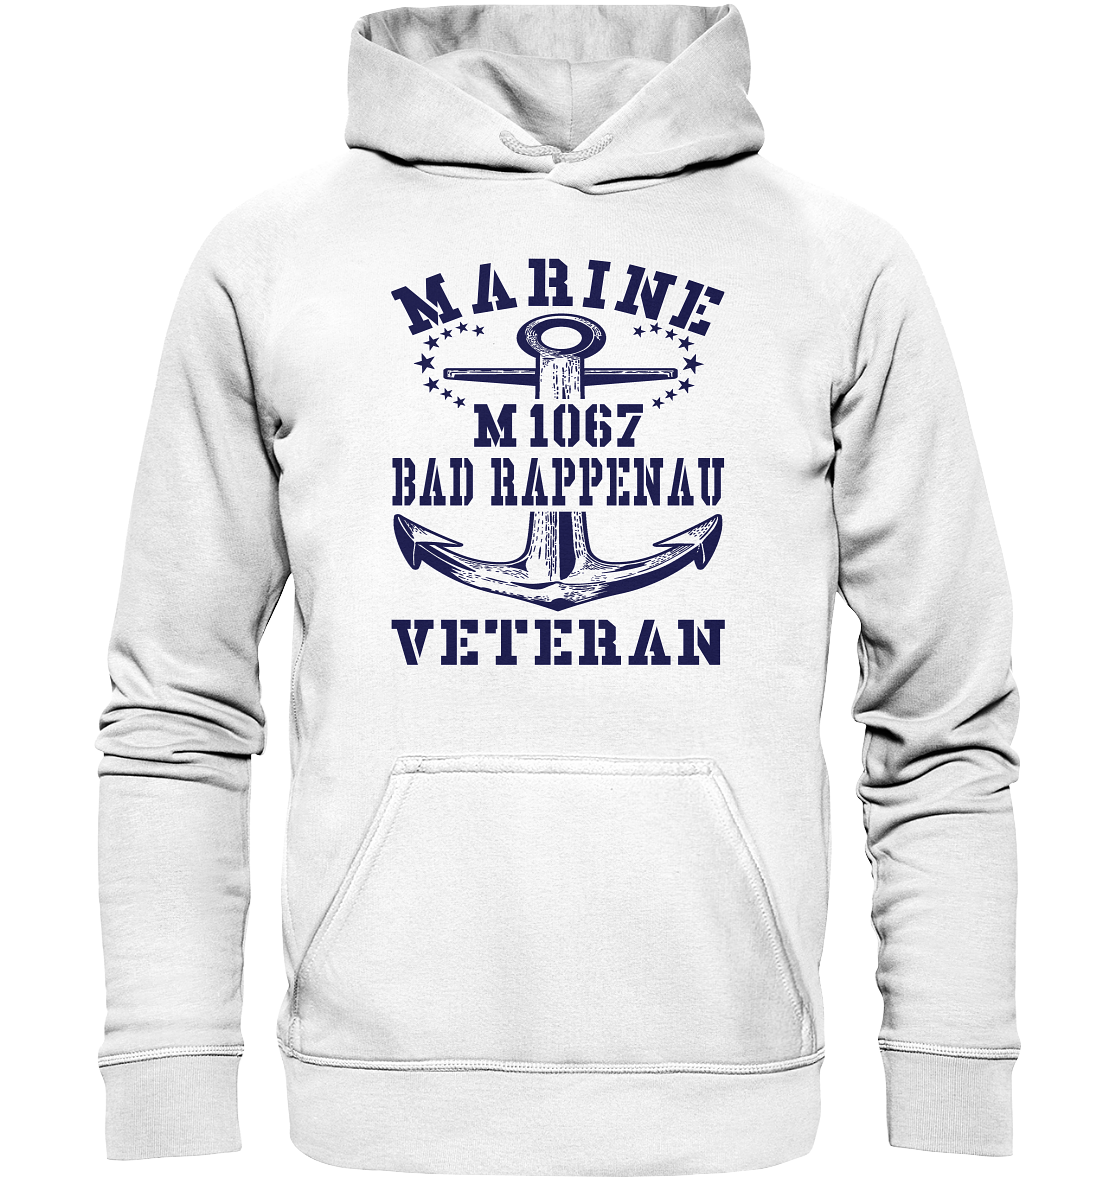 Mij.-Boot M1067 BAD RAPPENAU Marine Veteran - Basic Unisex Hoodie